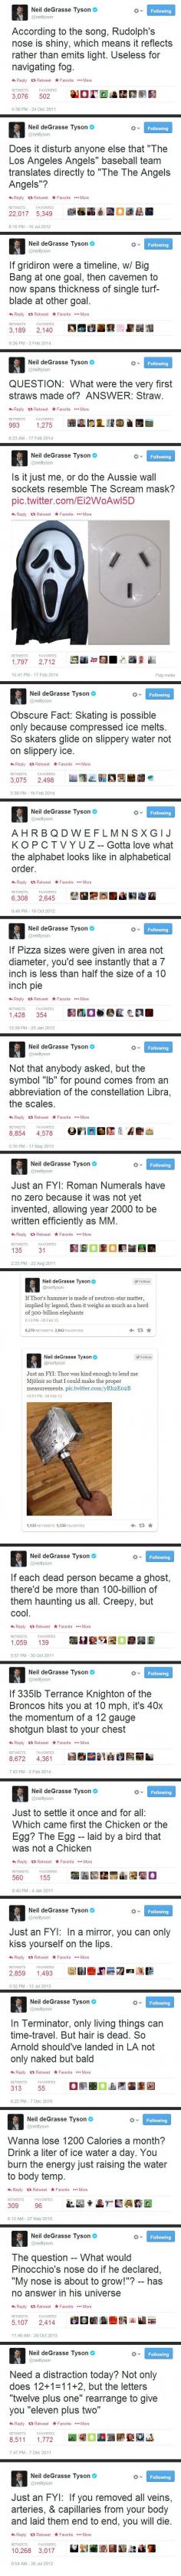 Some of Neil deGrasse Tyson's best tweets